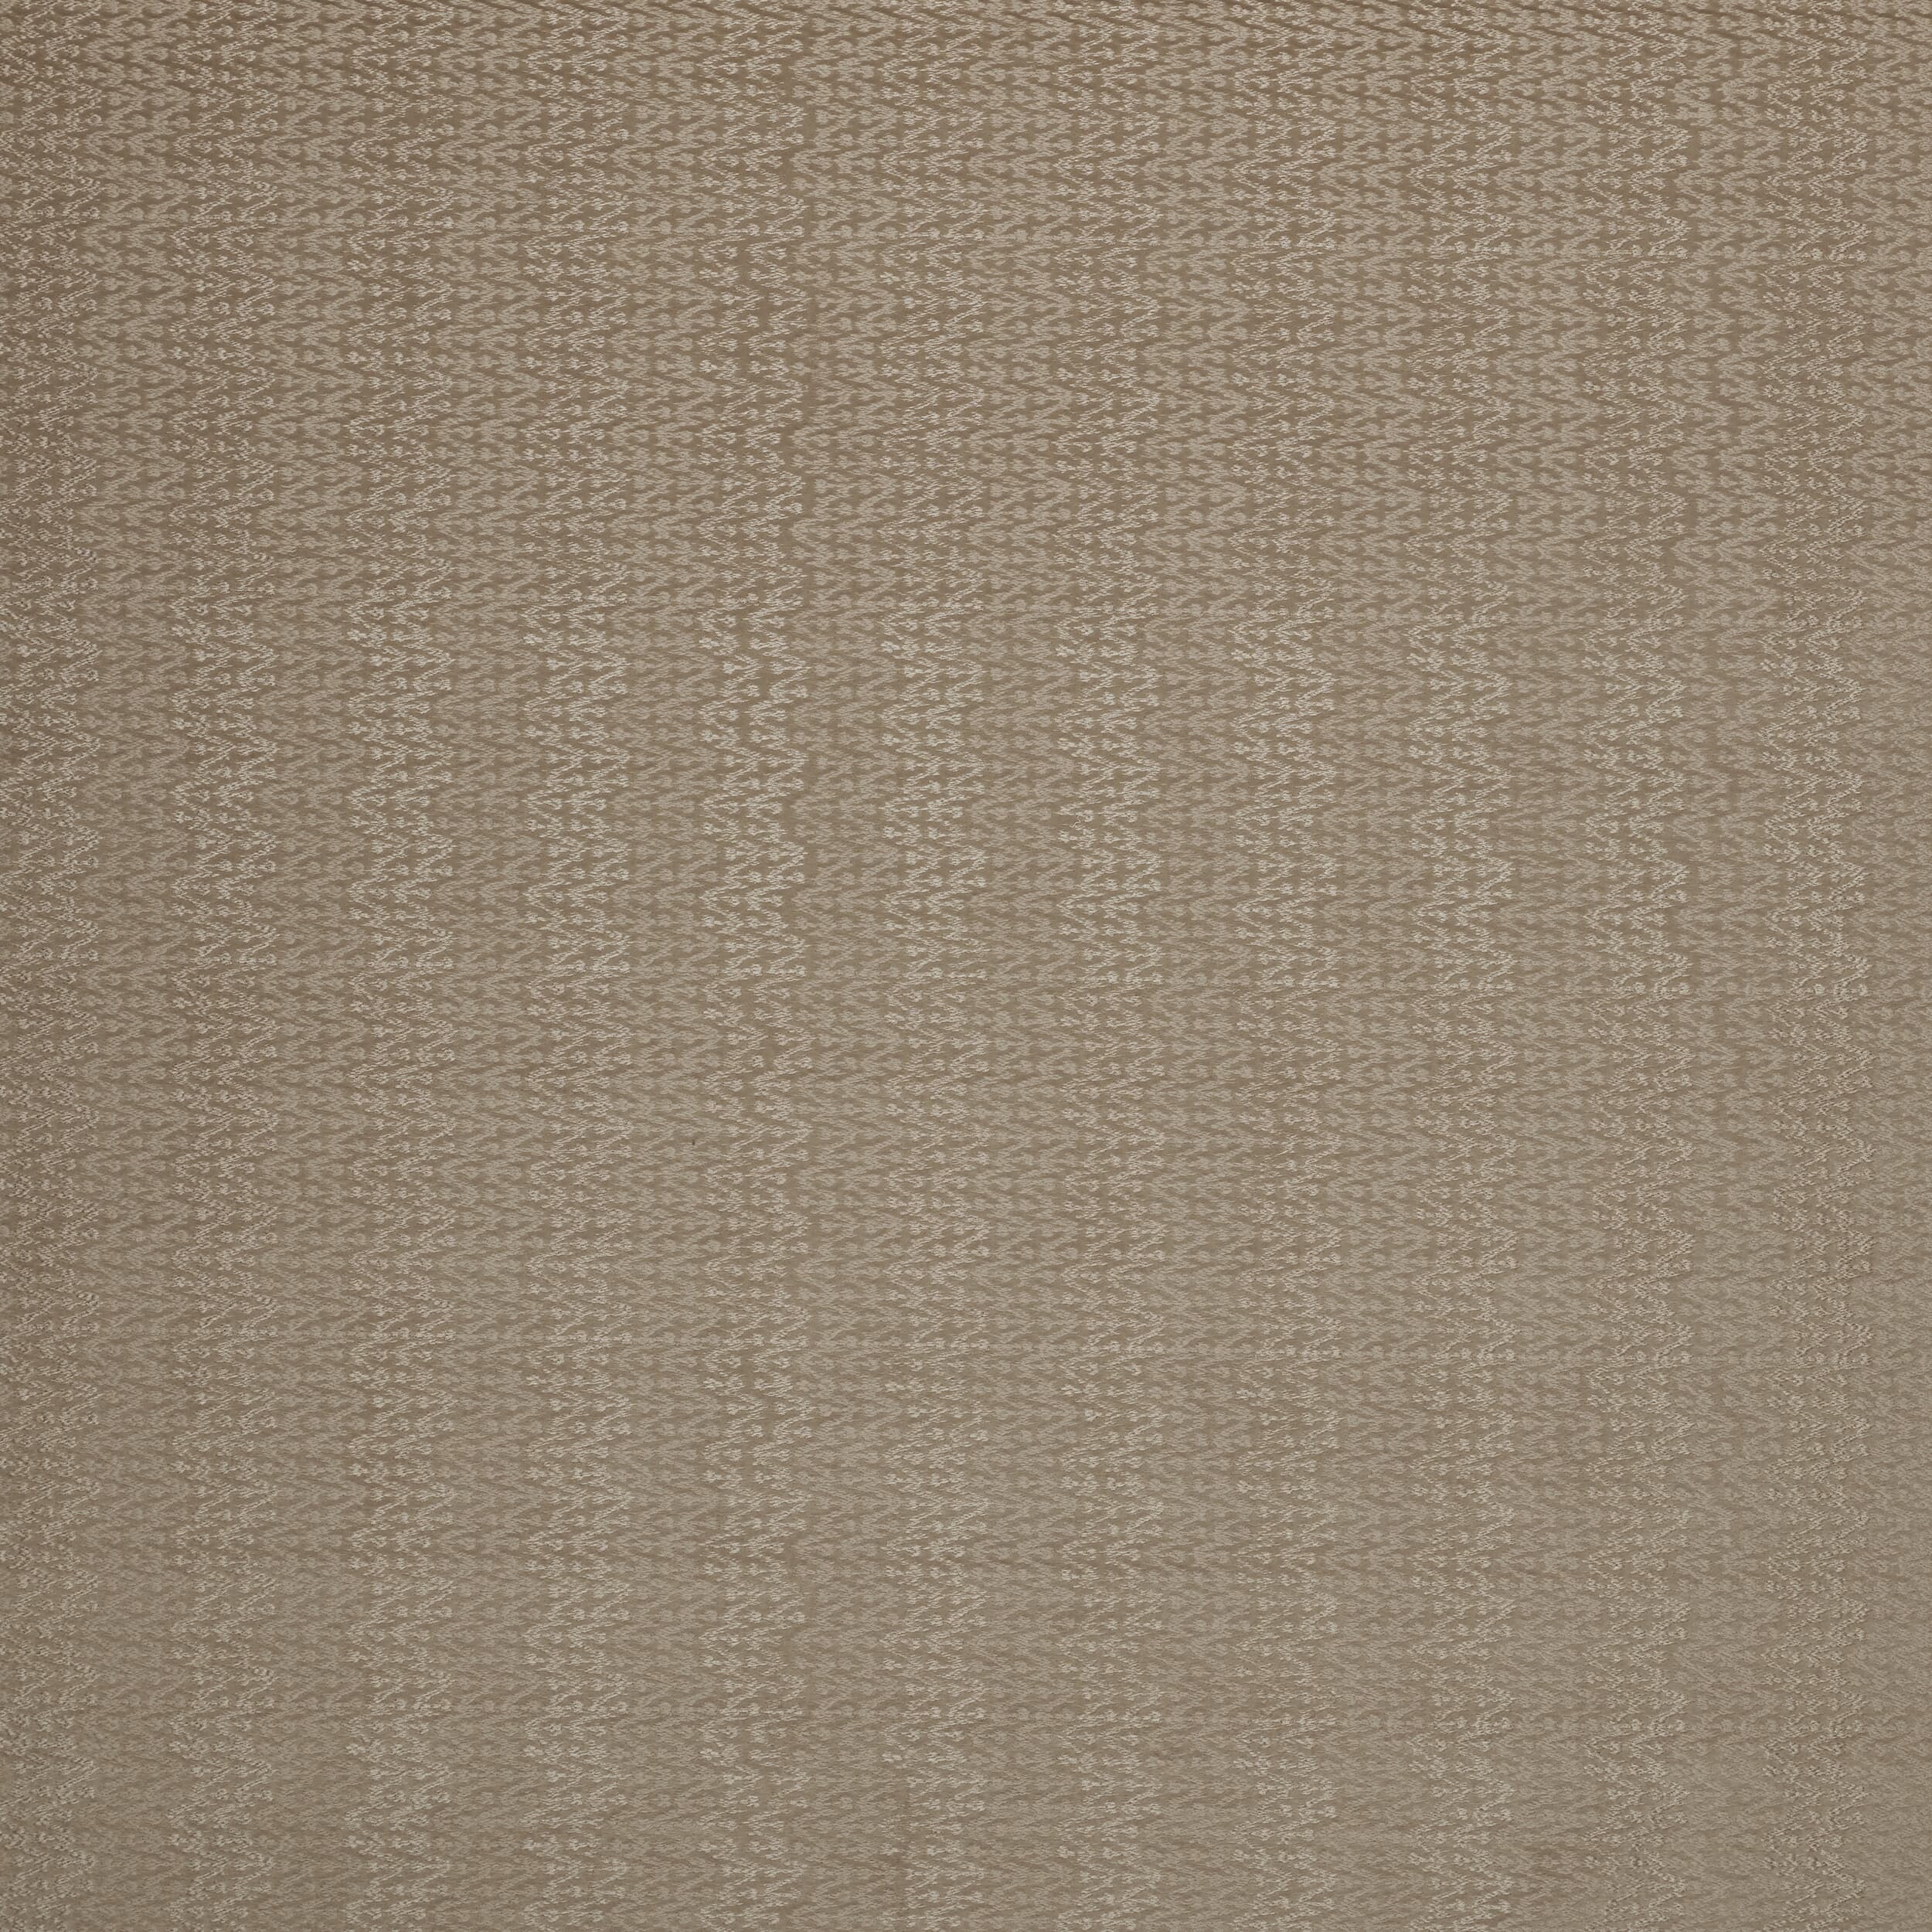 Ferel 1 Sandalwood by Stout Fabric